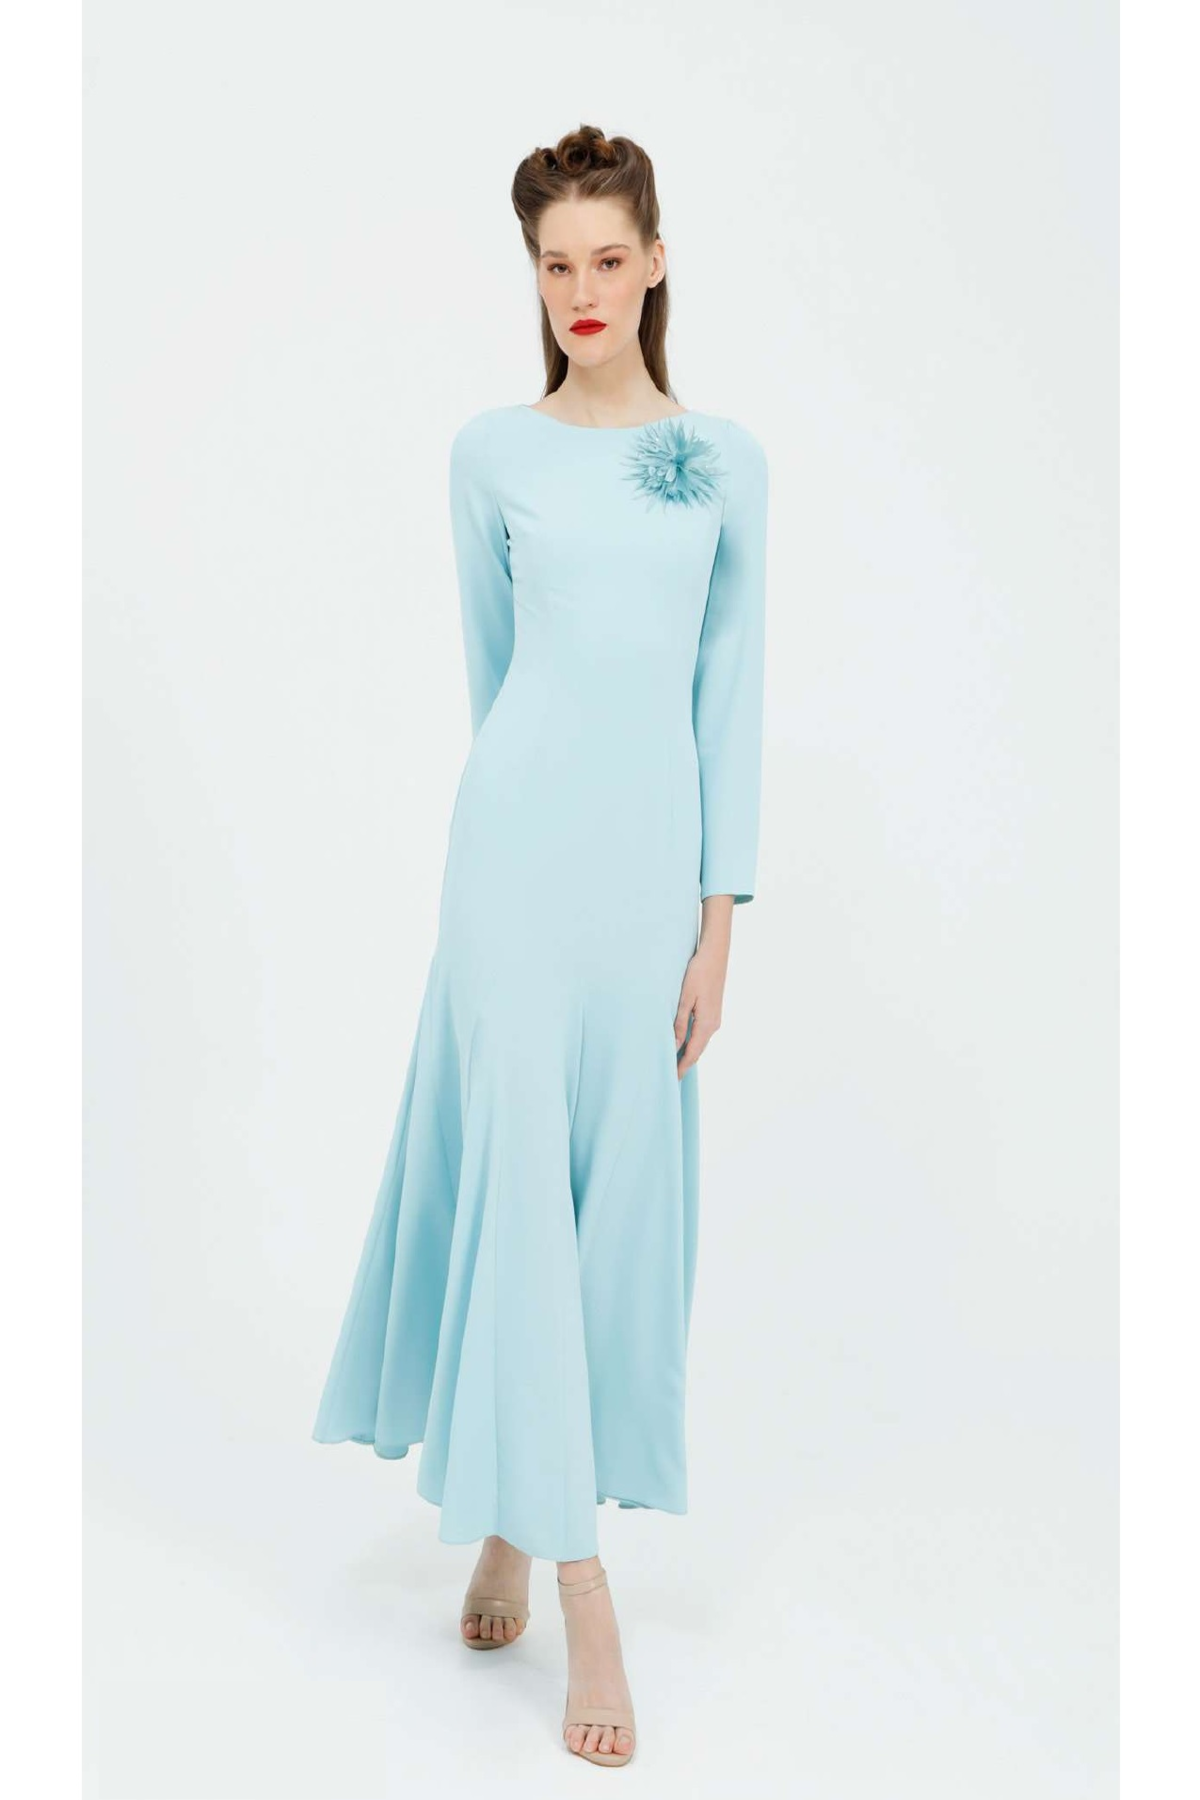 MZH024 DRESS فستان